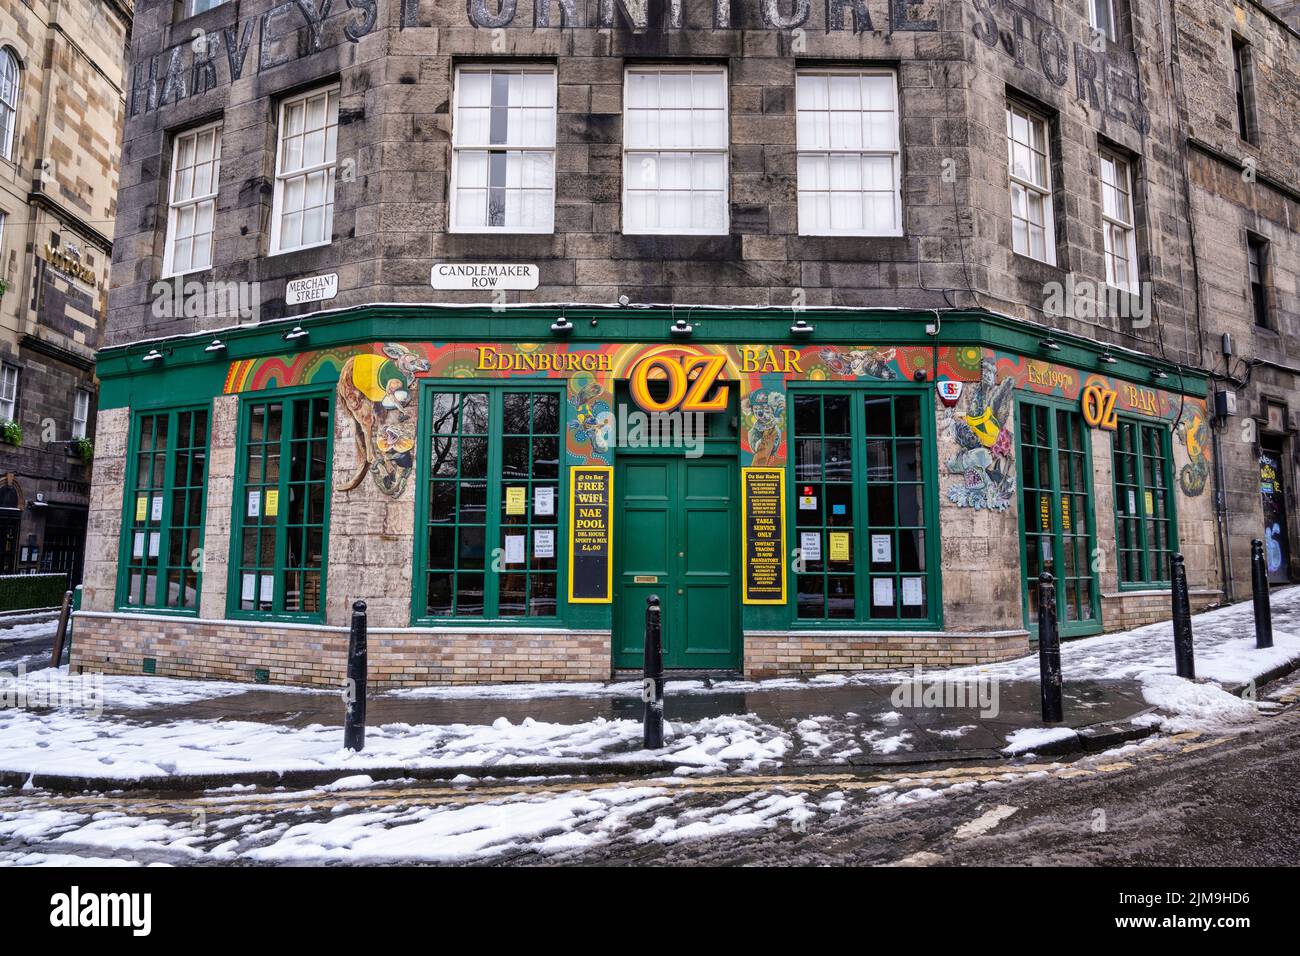 Edinburgh Oz Bar in snow, Candlemaker Row, Edinburgh, Scotland, UK Stock Photo